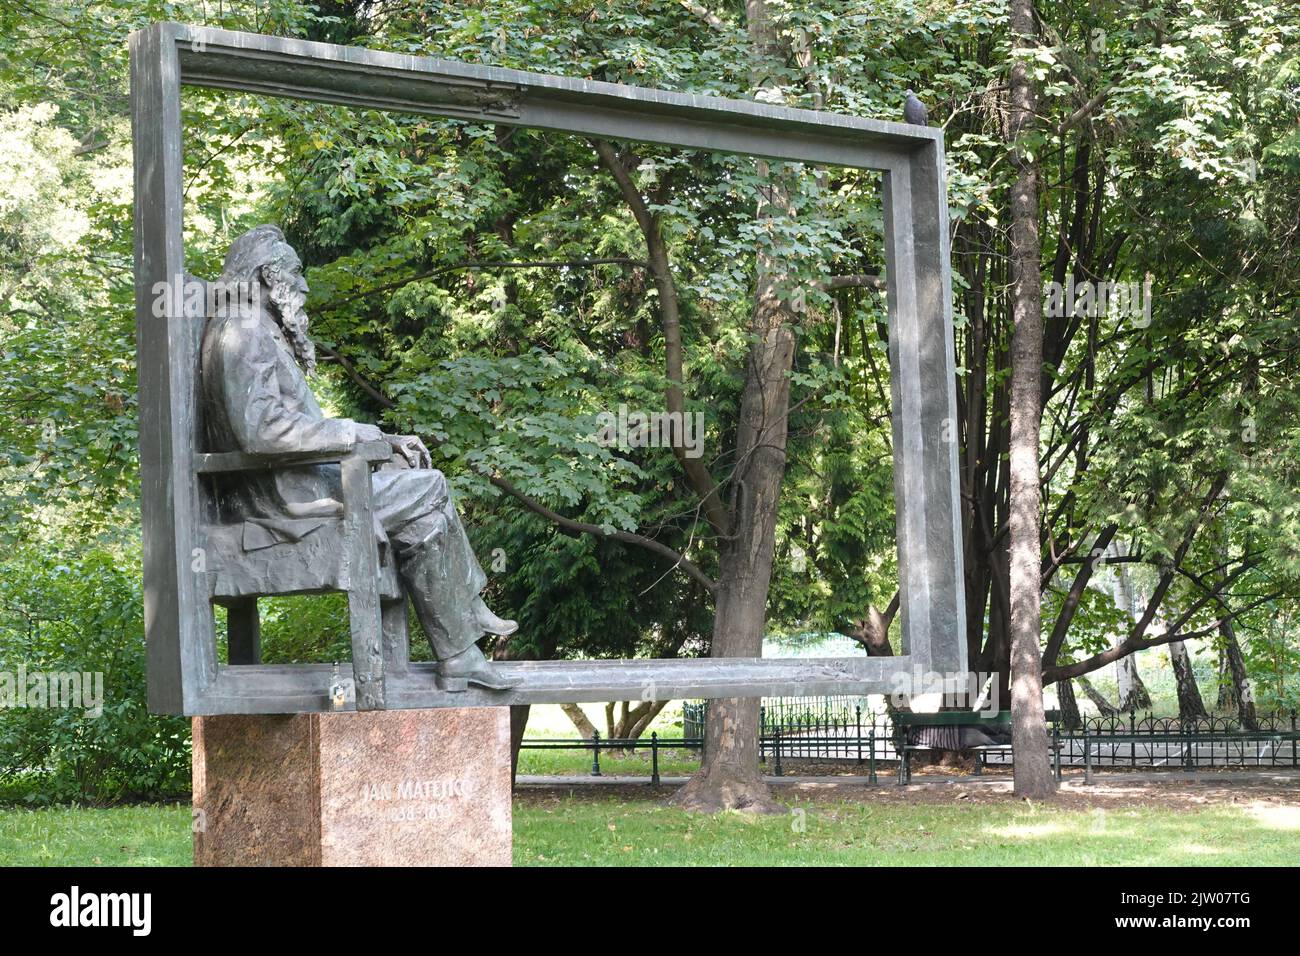 Statue of Jan Matejko 19th Century Polish painter, Planty, Krakow, Poland, Europe Stock Photo